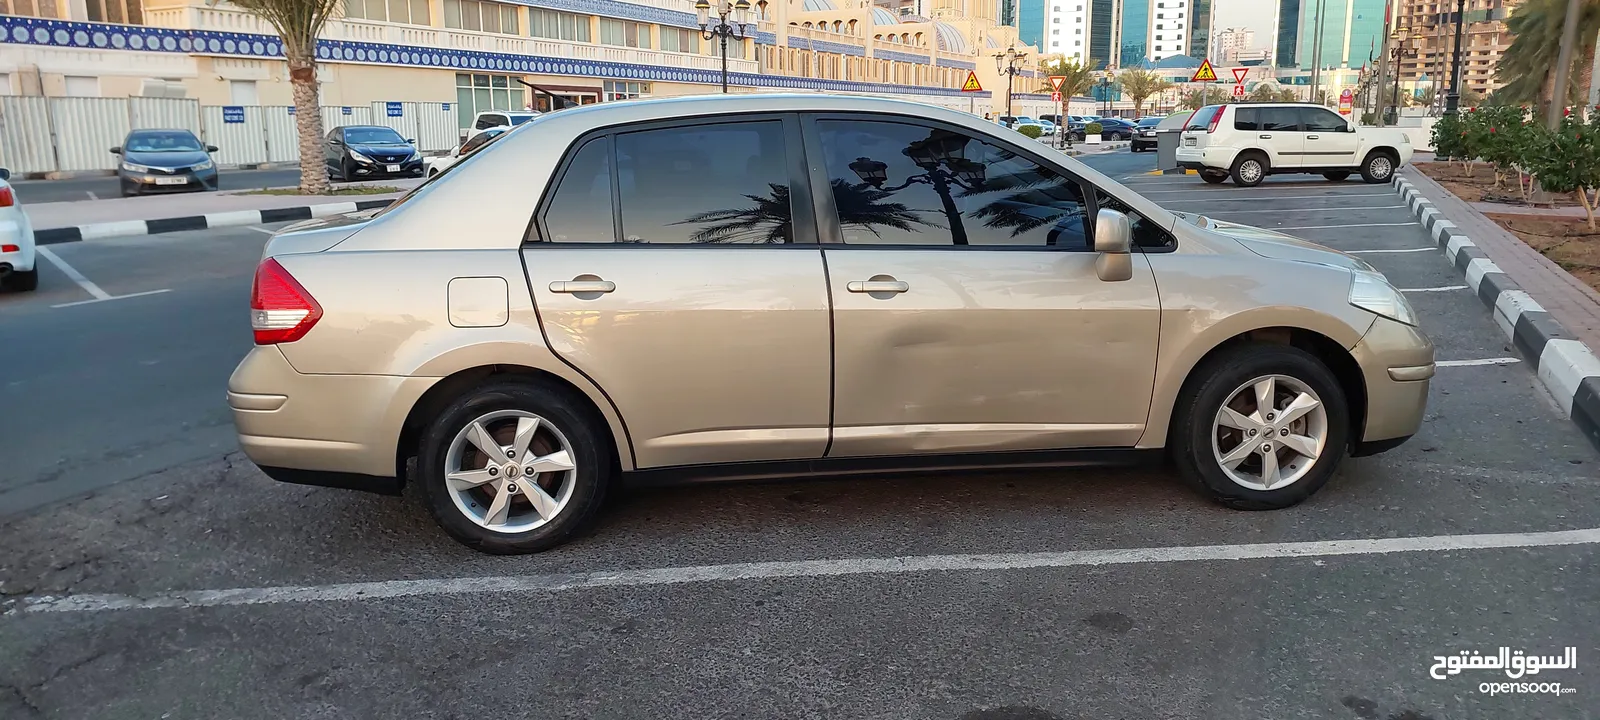 نيسان تيدا للبيع  موديل = 2012  1.8 Nissan Tiida for sale.  2012 Gulf model in very good condition